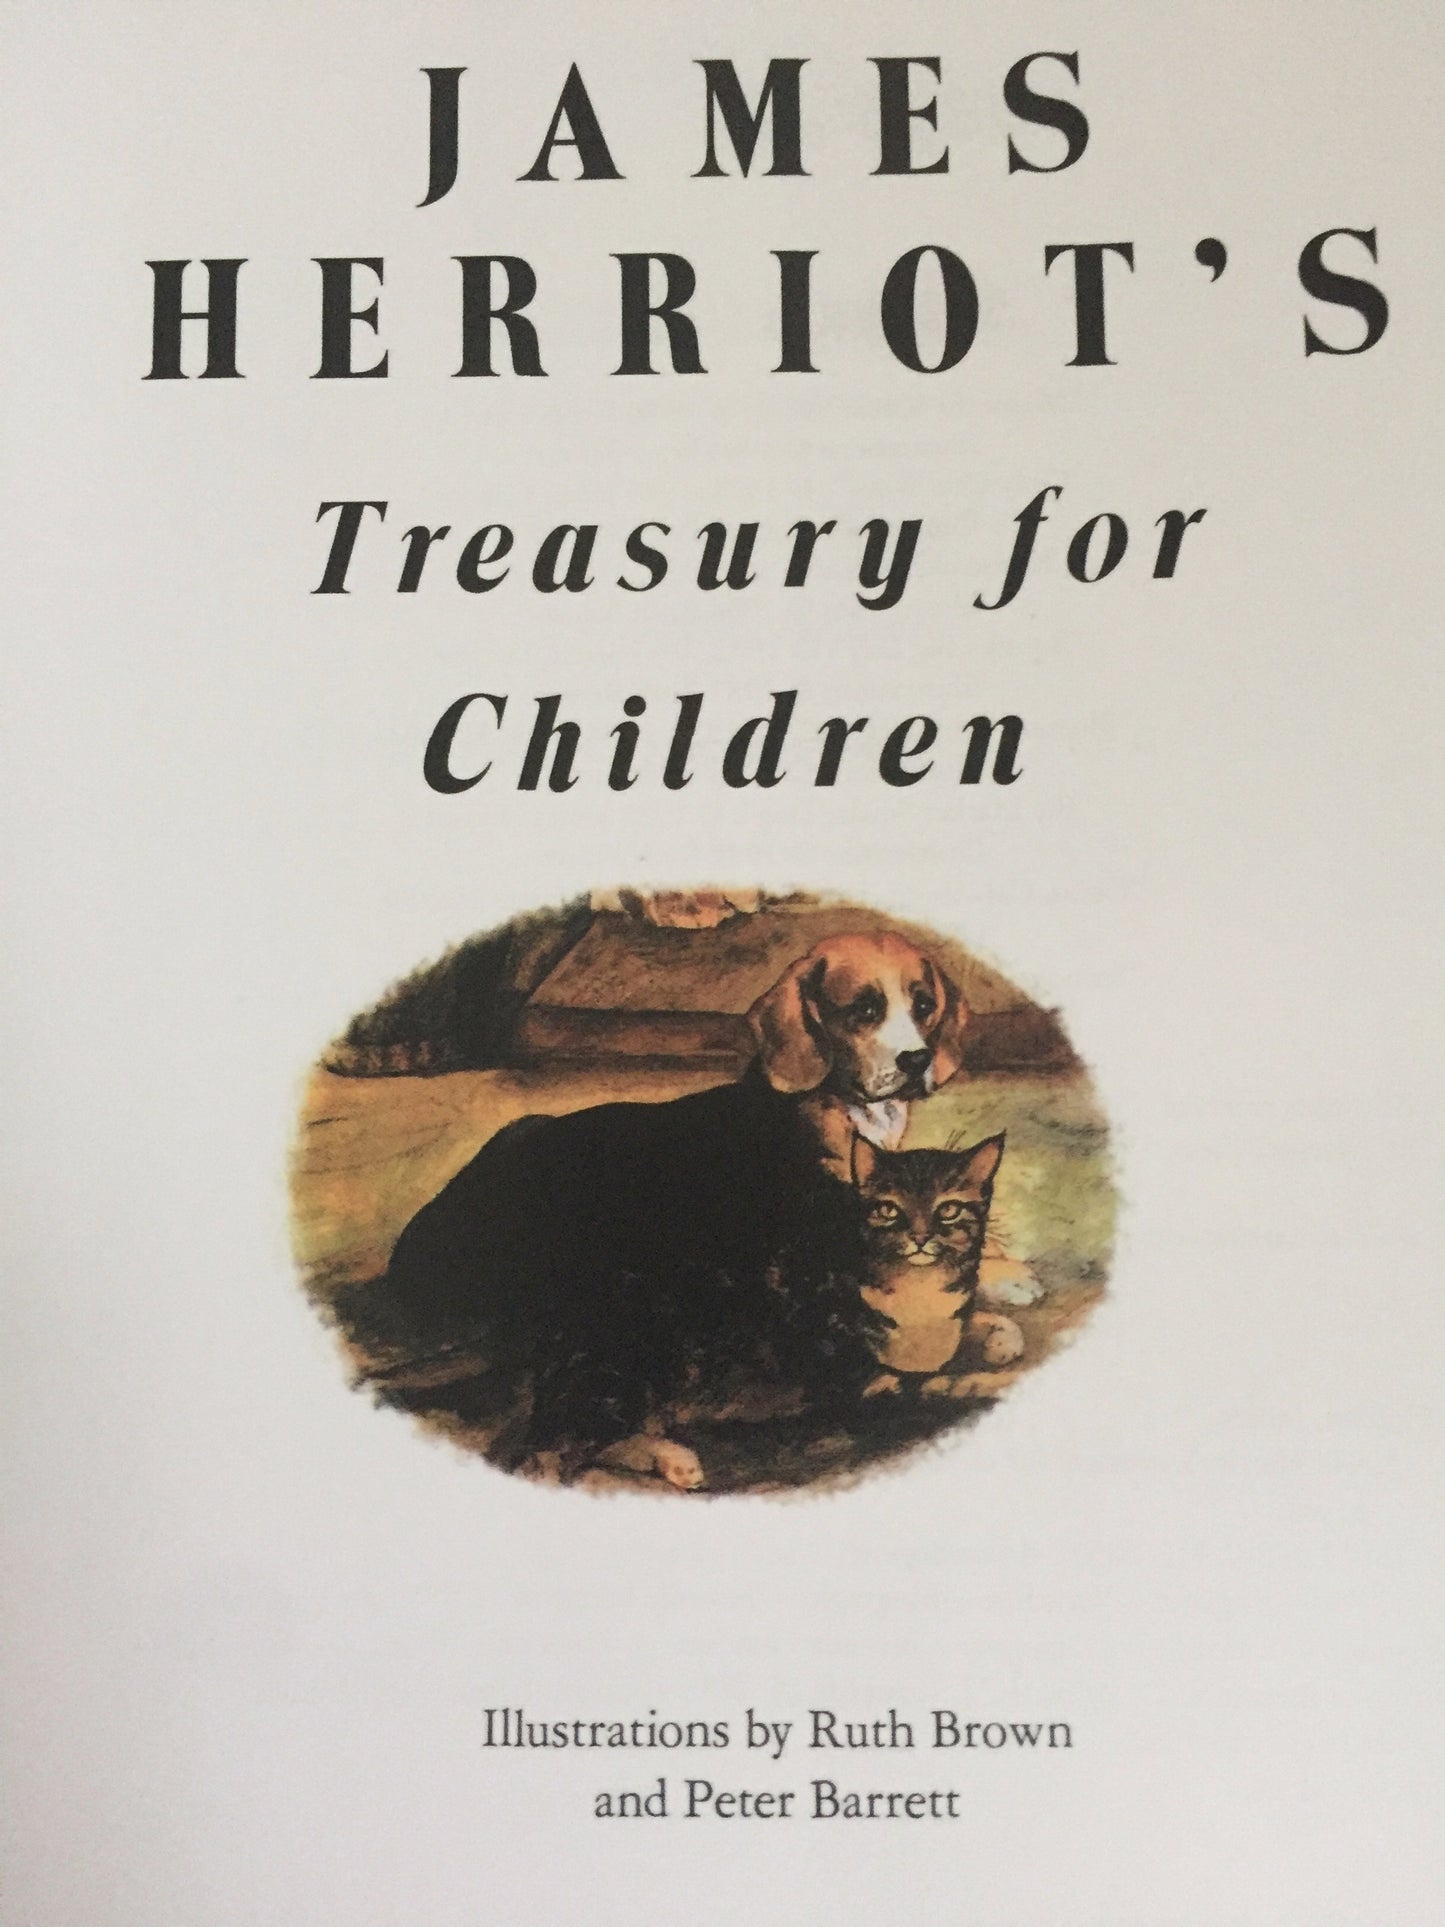 Children's Chapter Picture Book - JAMES HERRIOT'S TREASURY for CHILDREN